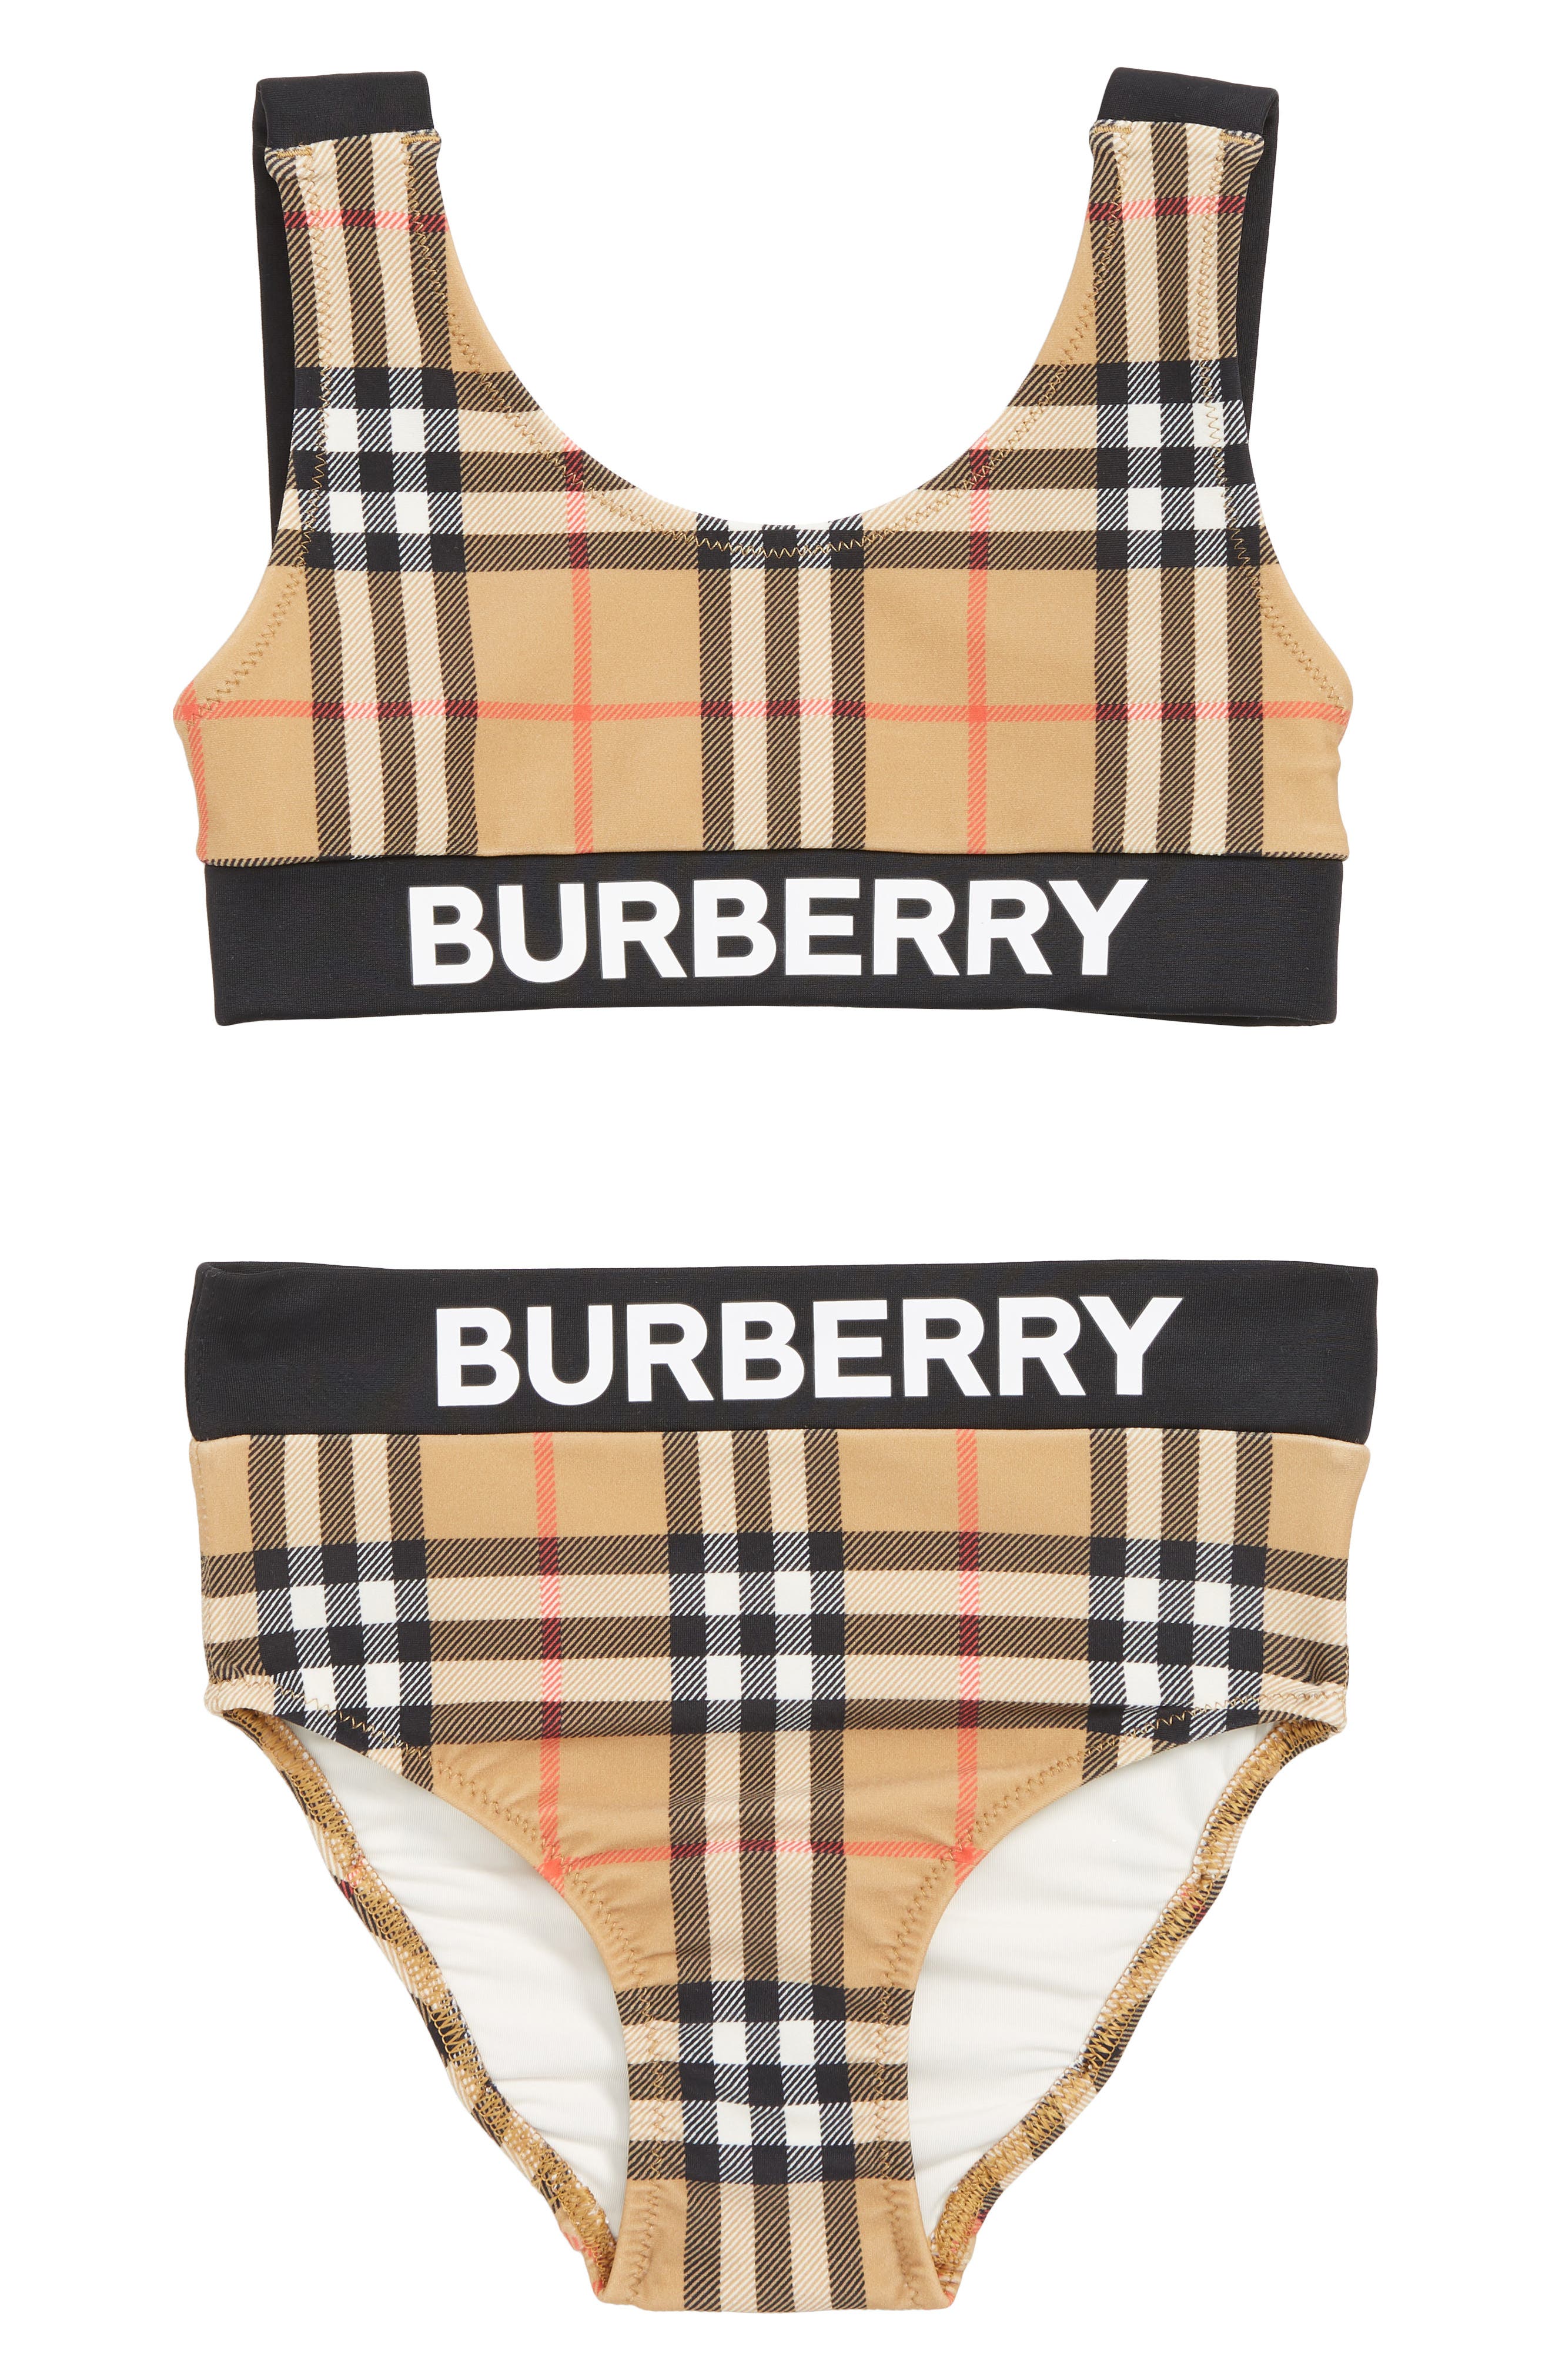 burberry designer clothing